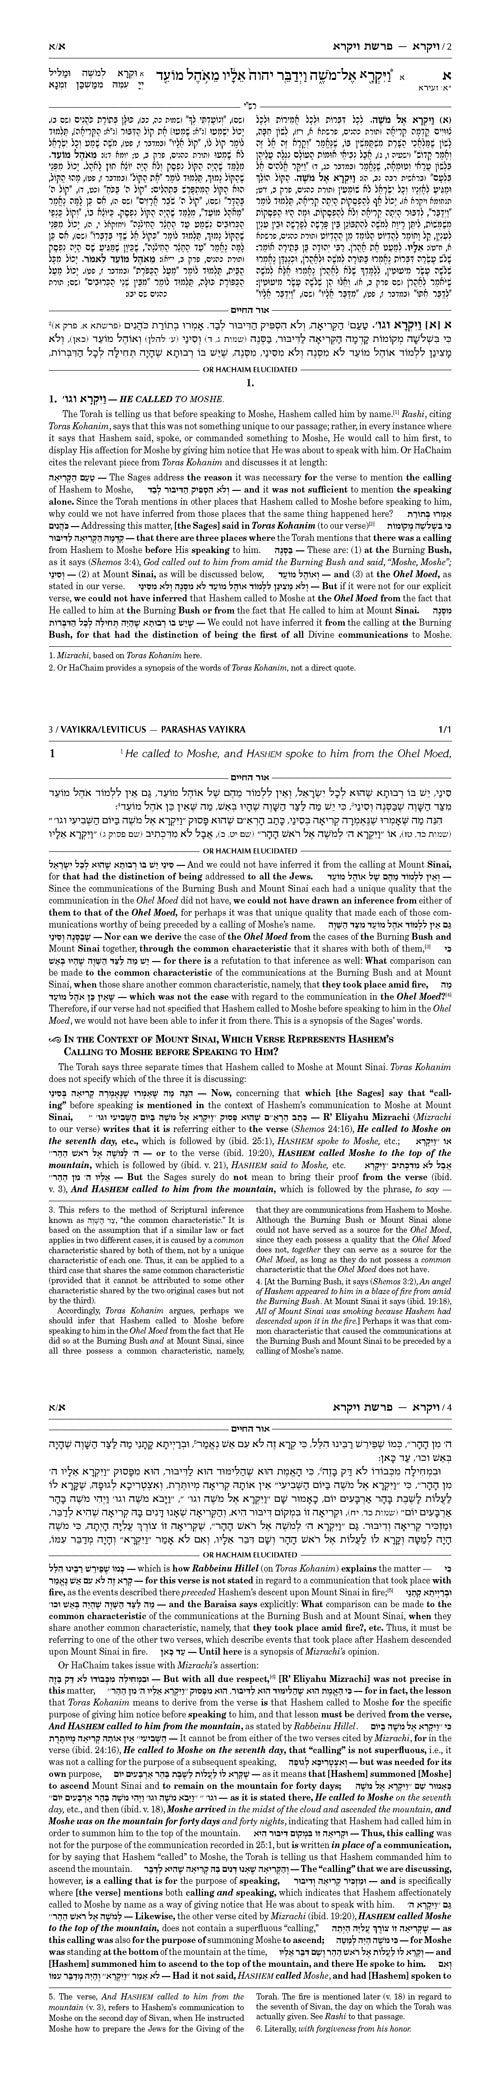 Or HaChaim Vayikra/Leviticus Vol. 1: Vayikra – Metzora - Yaakov and Ilana Melohn Edition